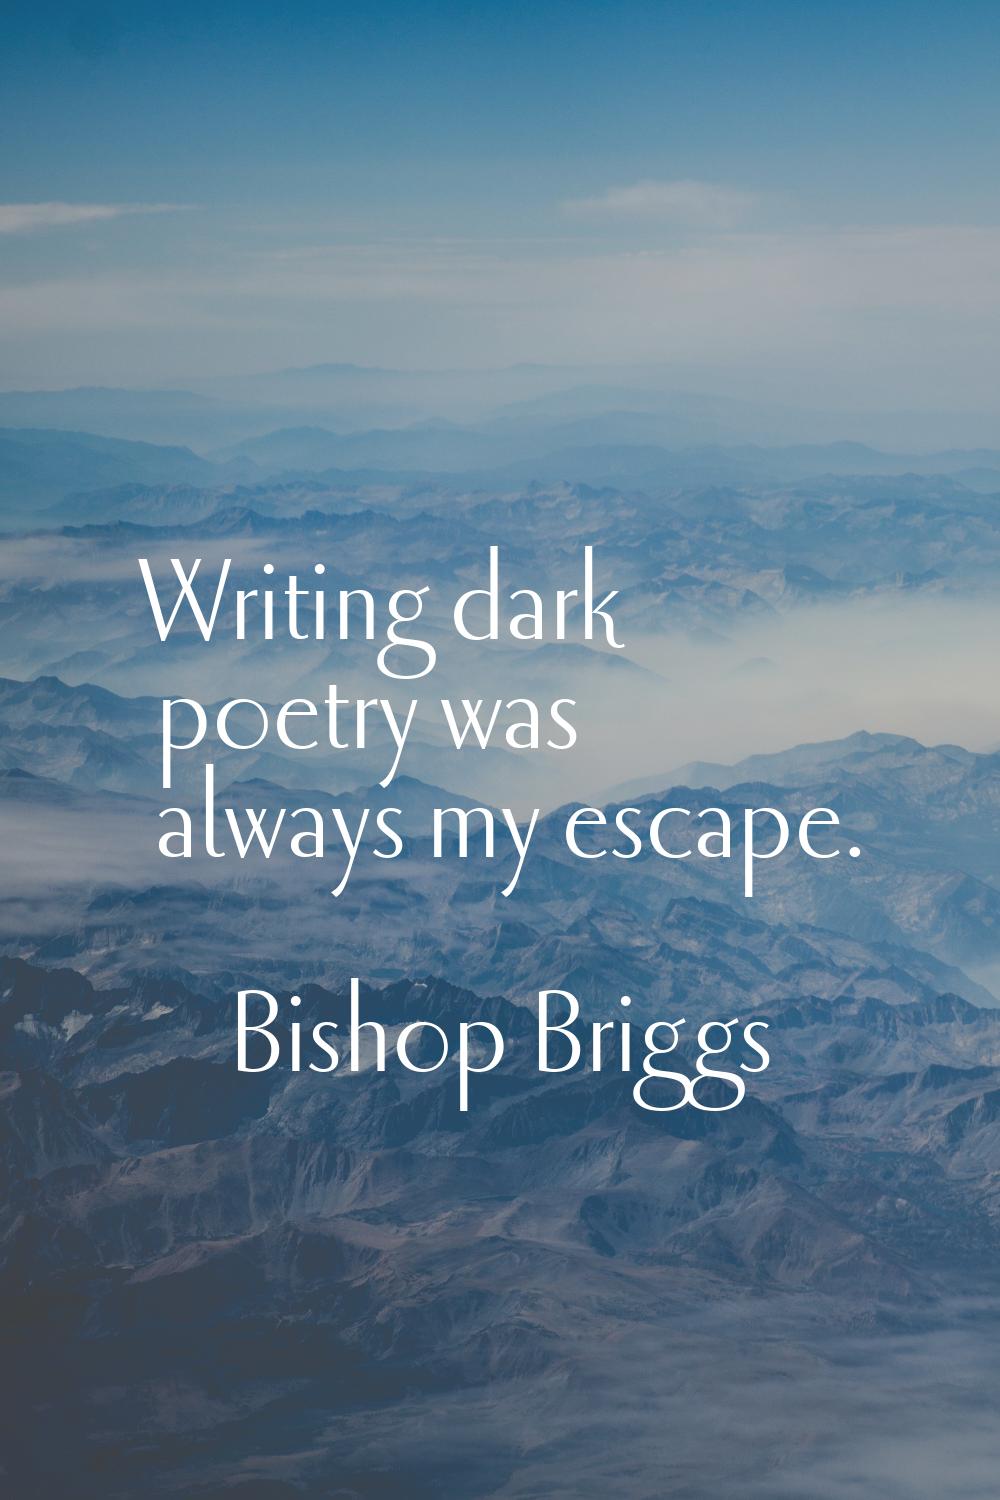 Writing dark poetry was always my escape.